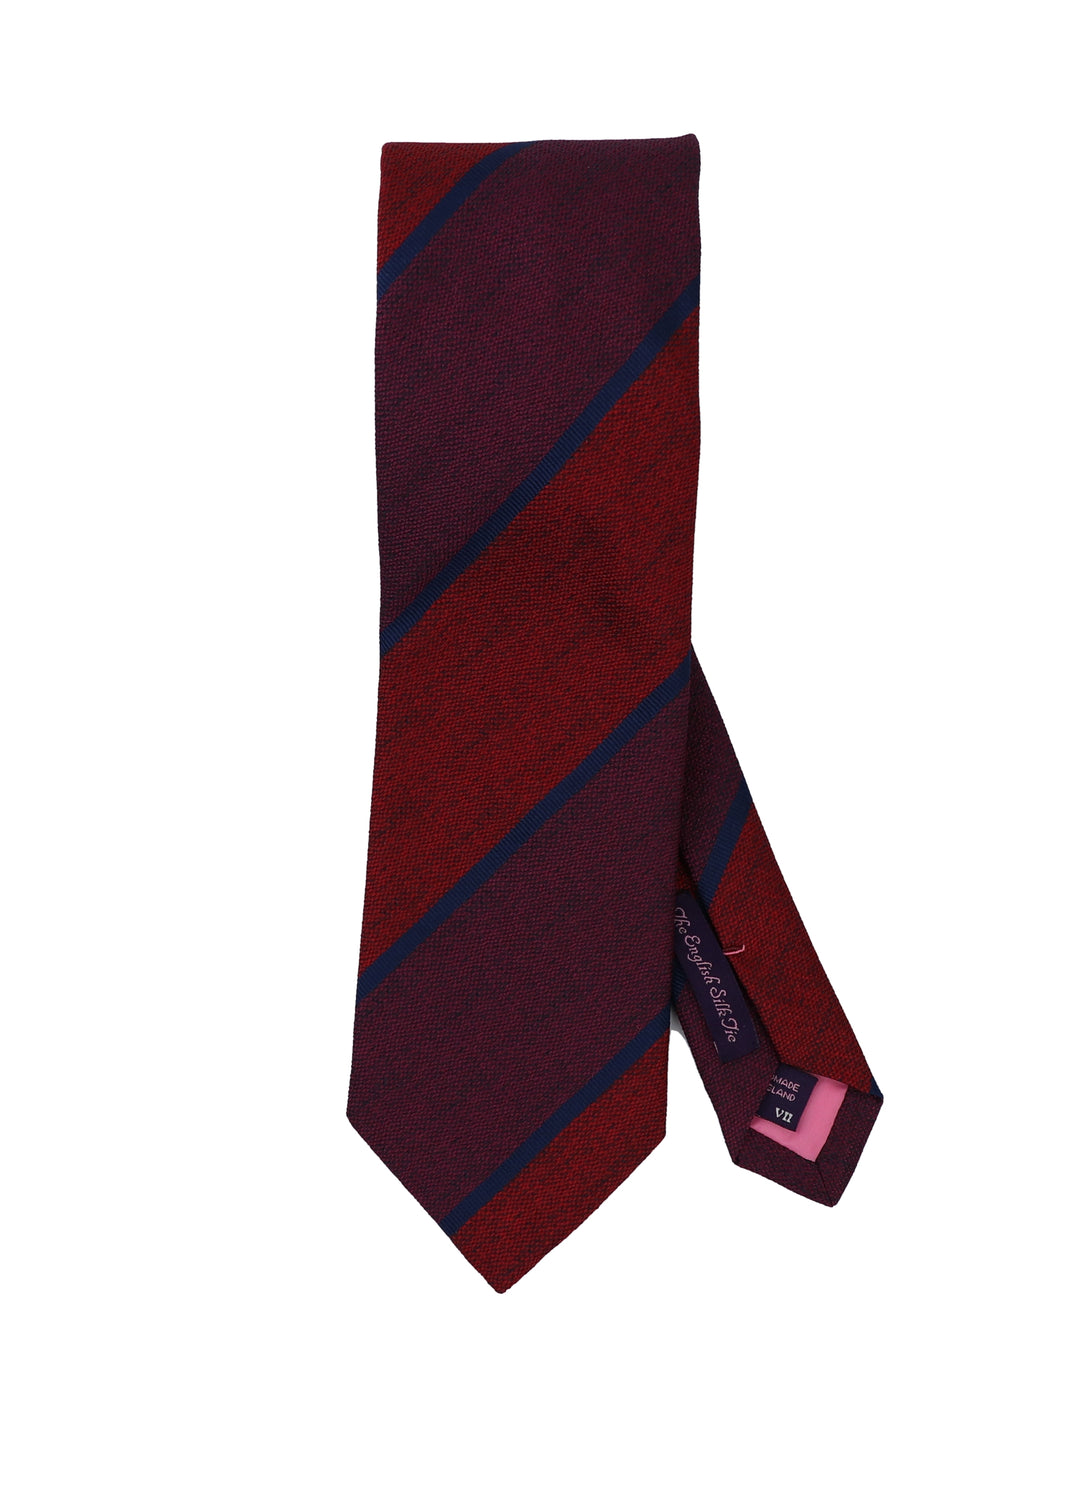 Lawrence Repp Stripe Necktie